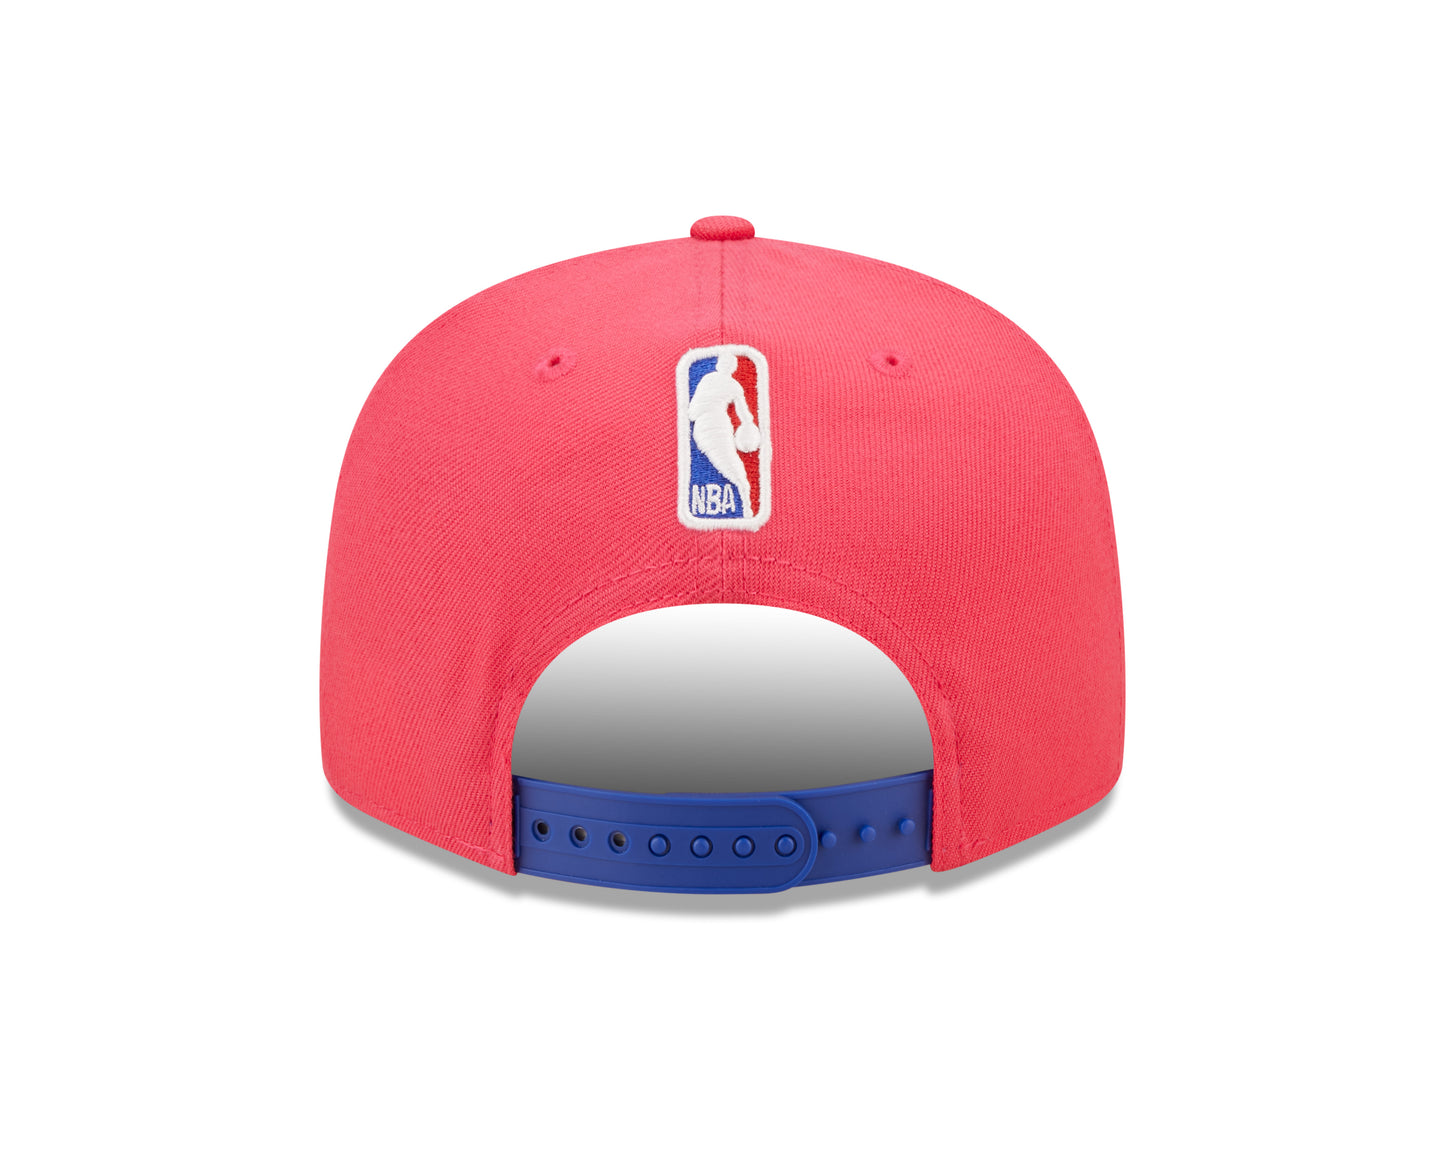 Washington Wizards New Era City Edition 9FIFTY Snap Back Hat - Pink/Blue